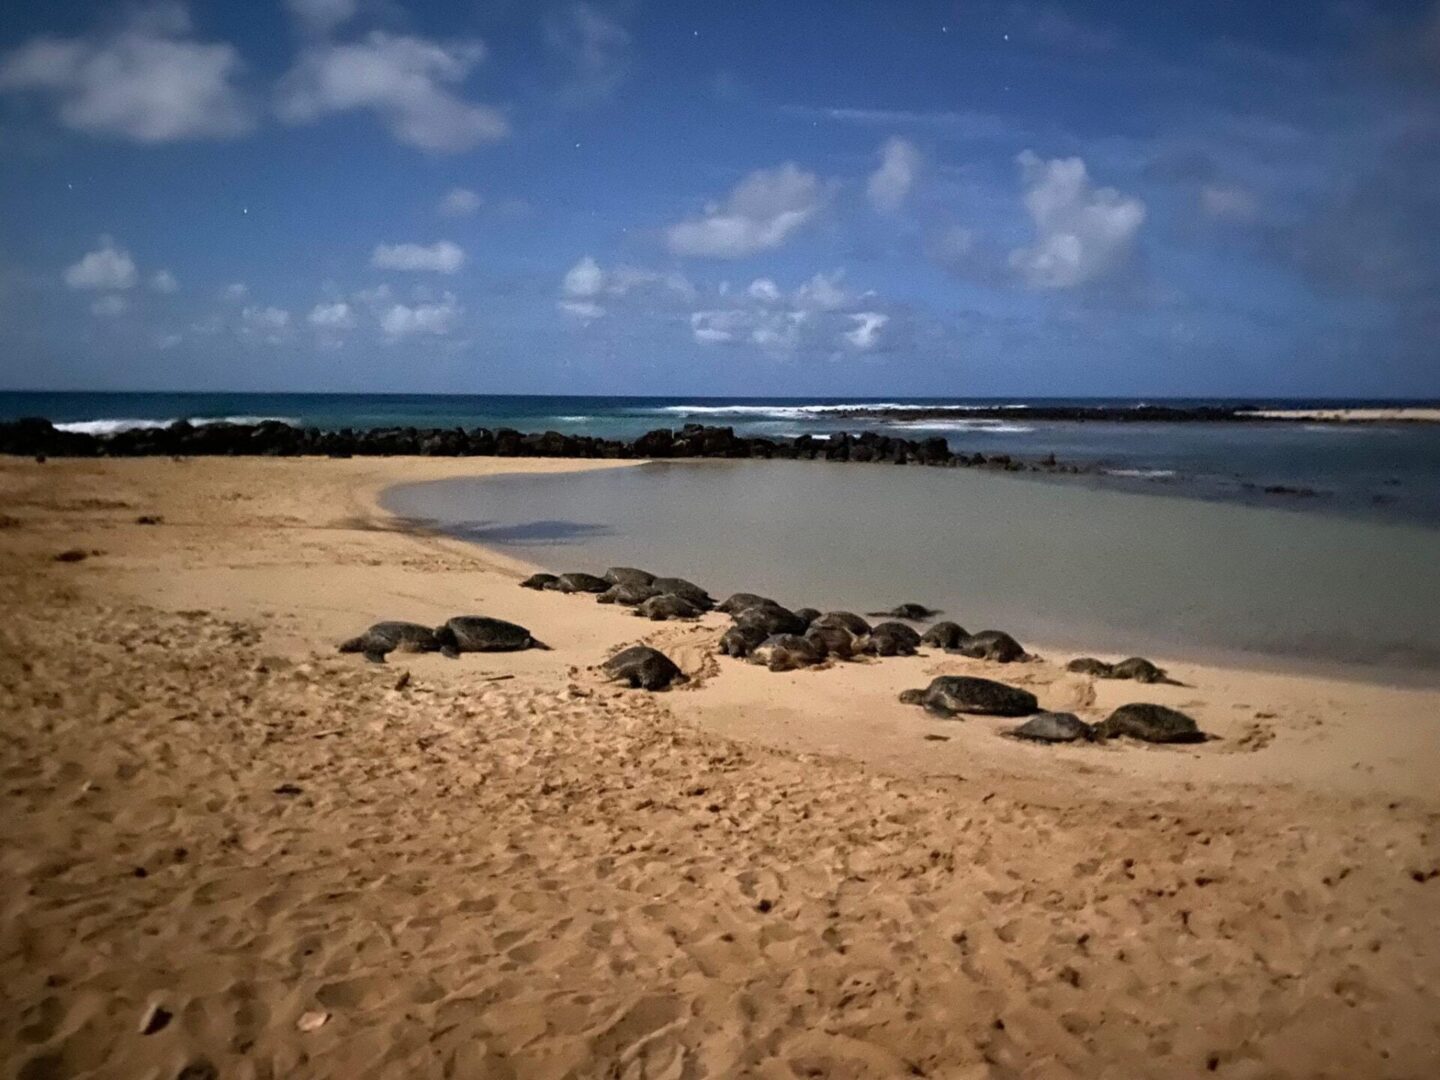 Seaside with a lot of kauai turtles